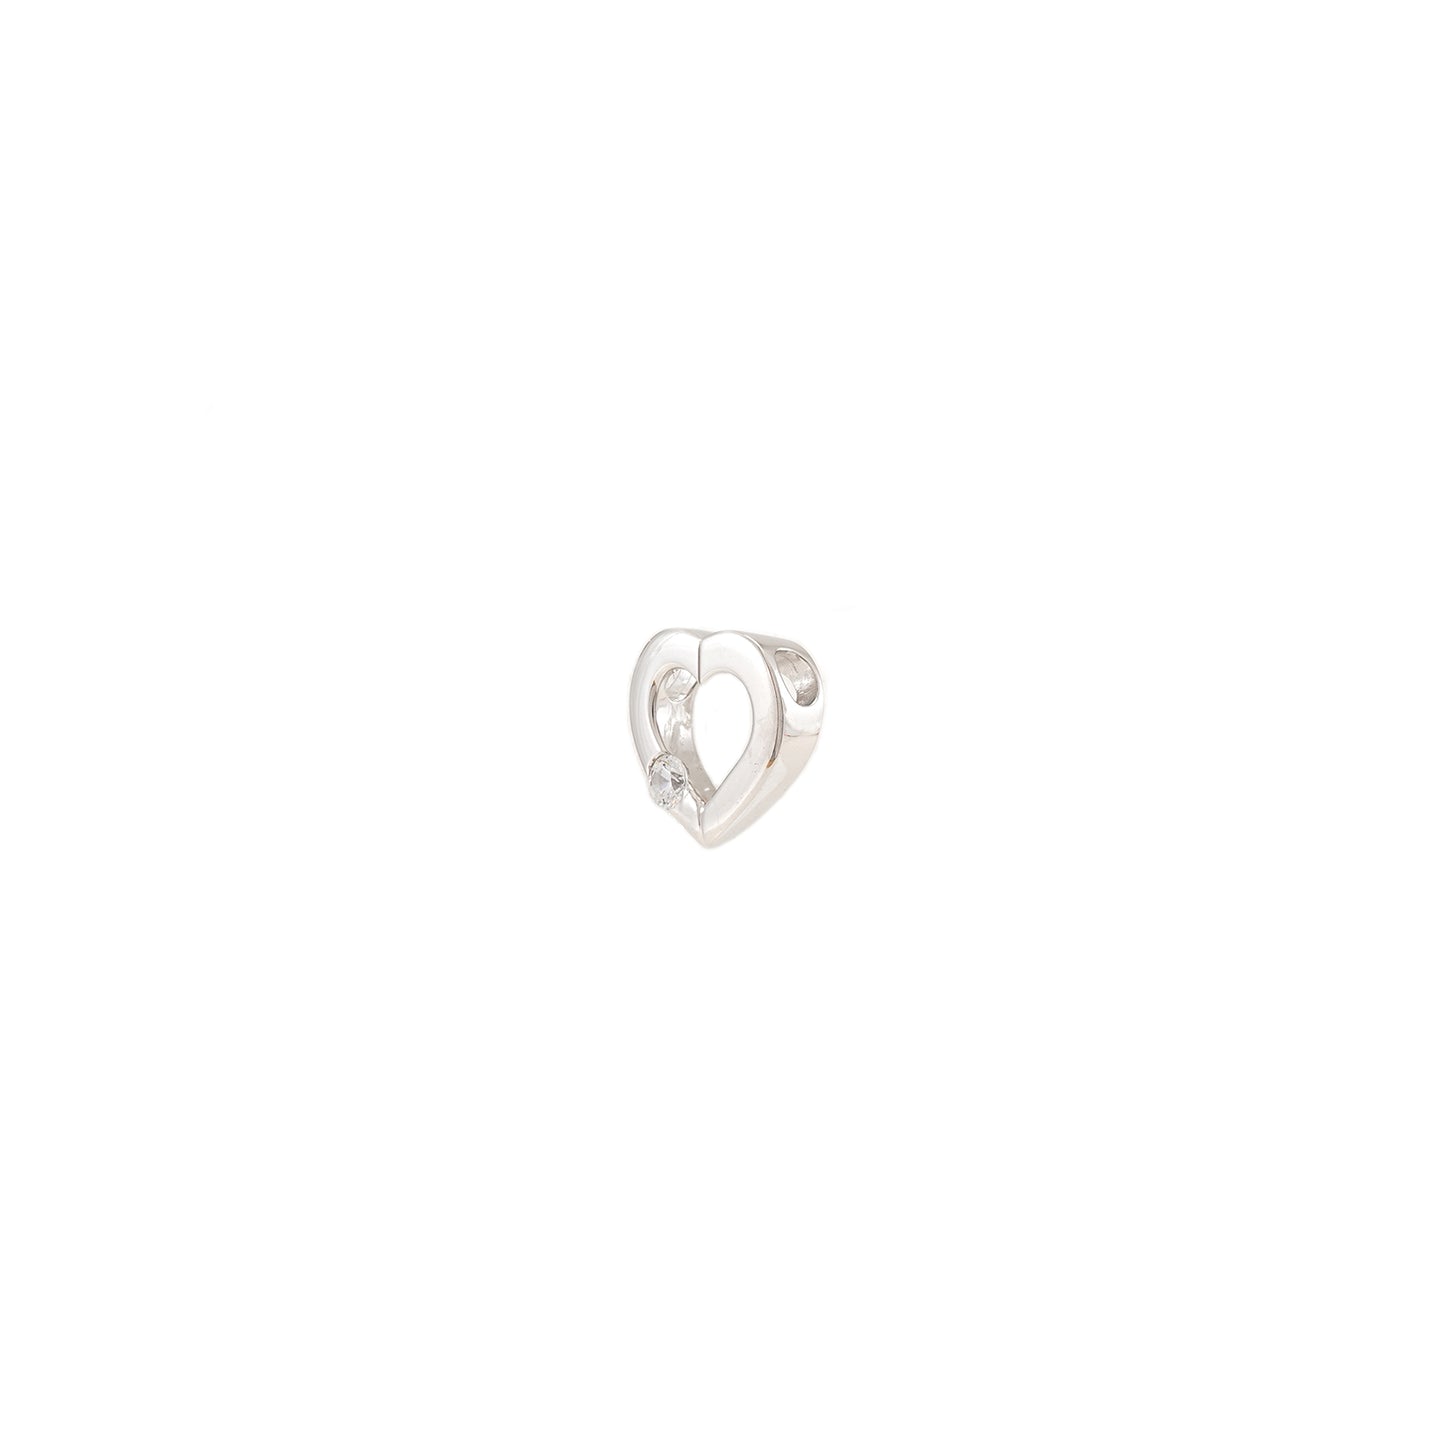 Pendant heart zirconia white gold 375 9K women's jewelry gold pendant chain pendant